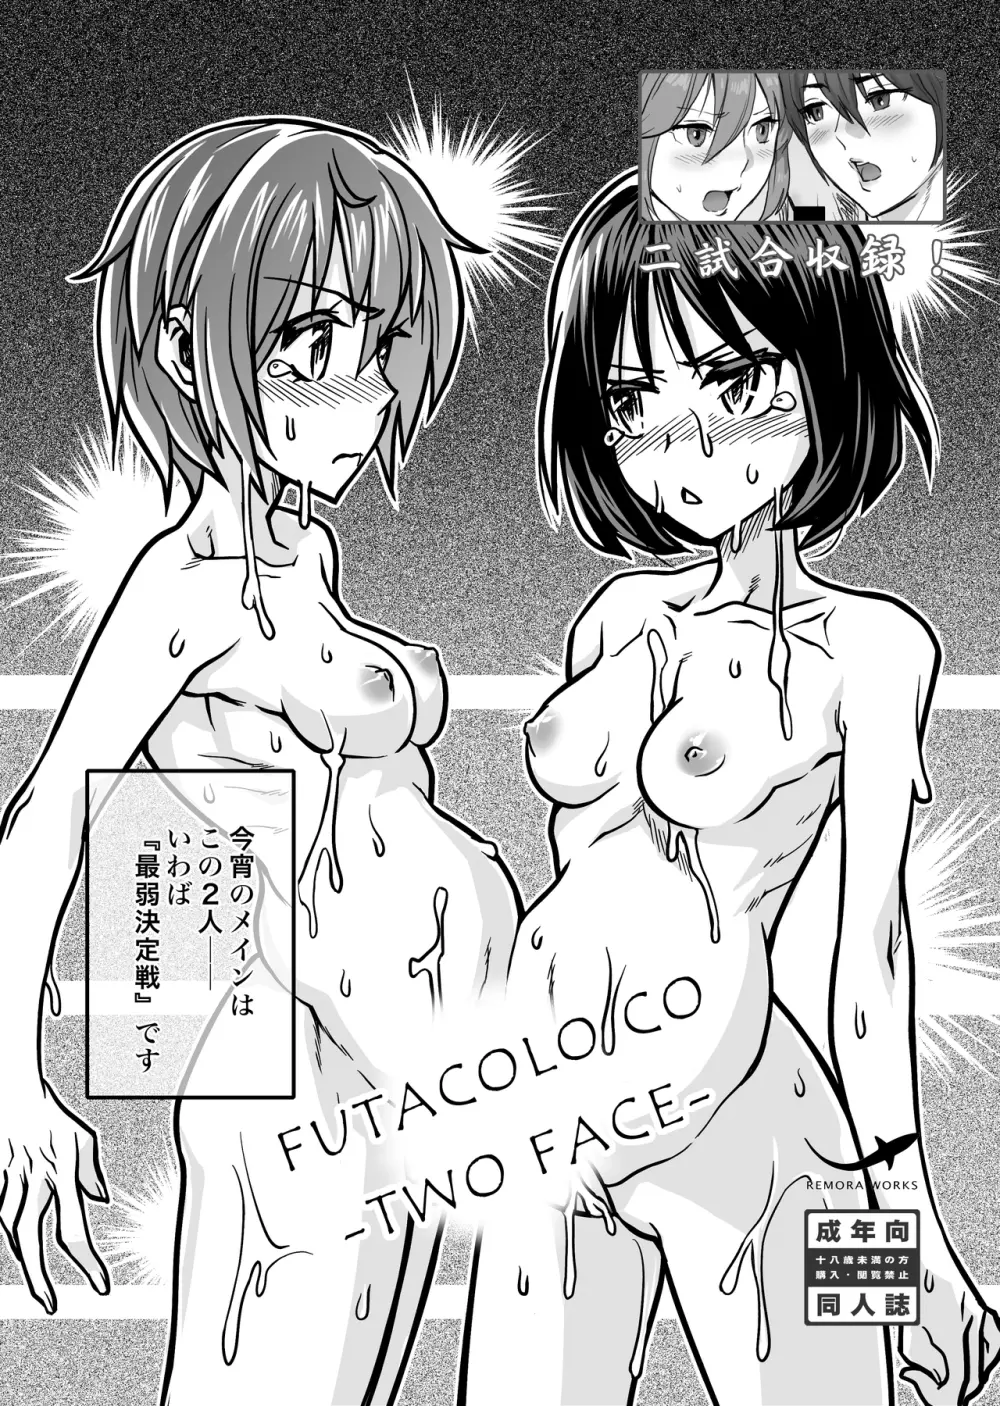 [remora works] FUTACOLO CG -IDOLA- / FUTACOLO CO -TWO FACE- Page.34